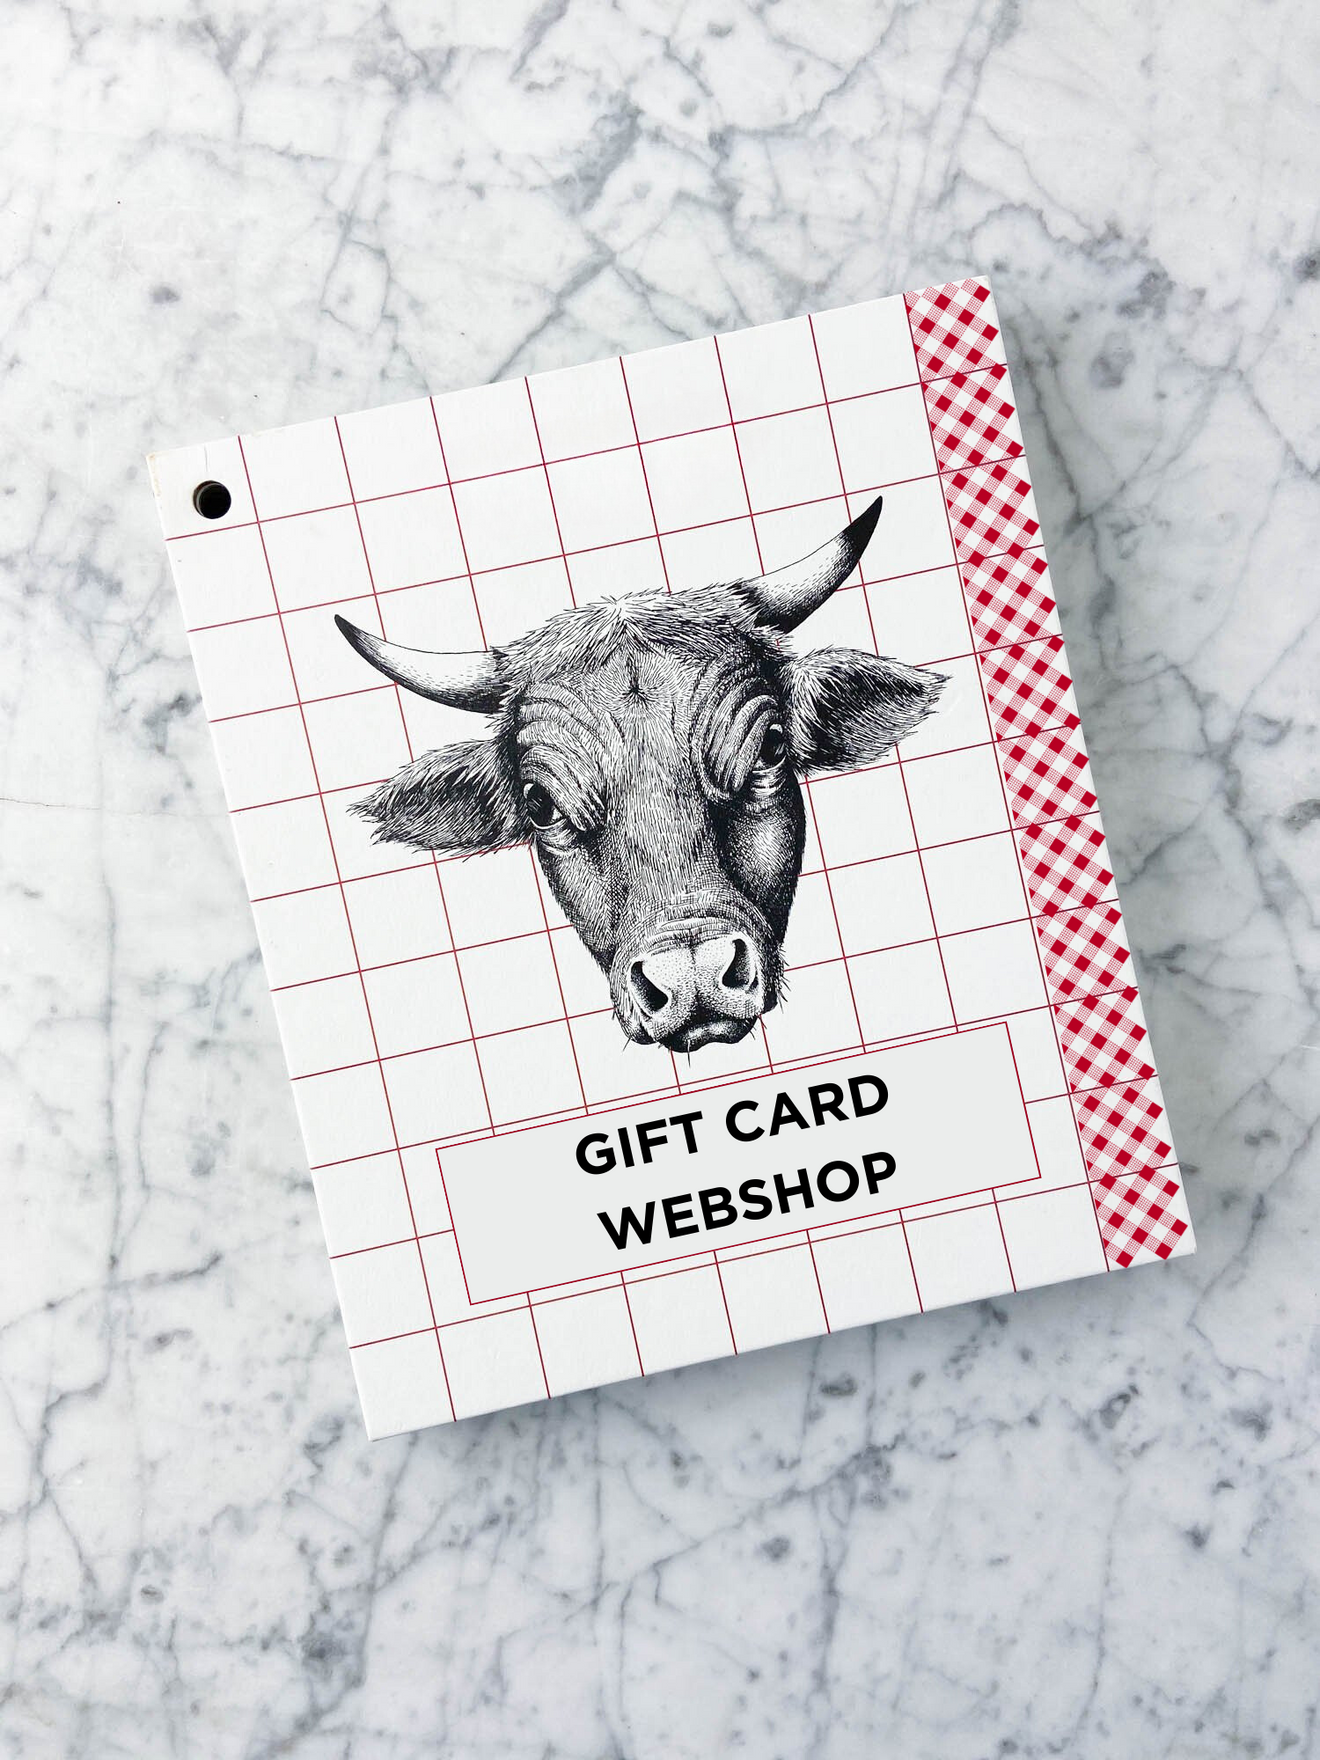 Gift card Webshop